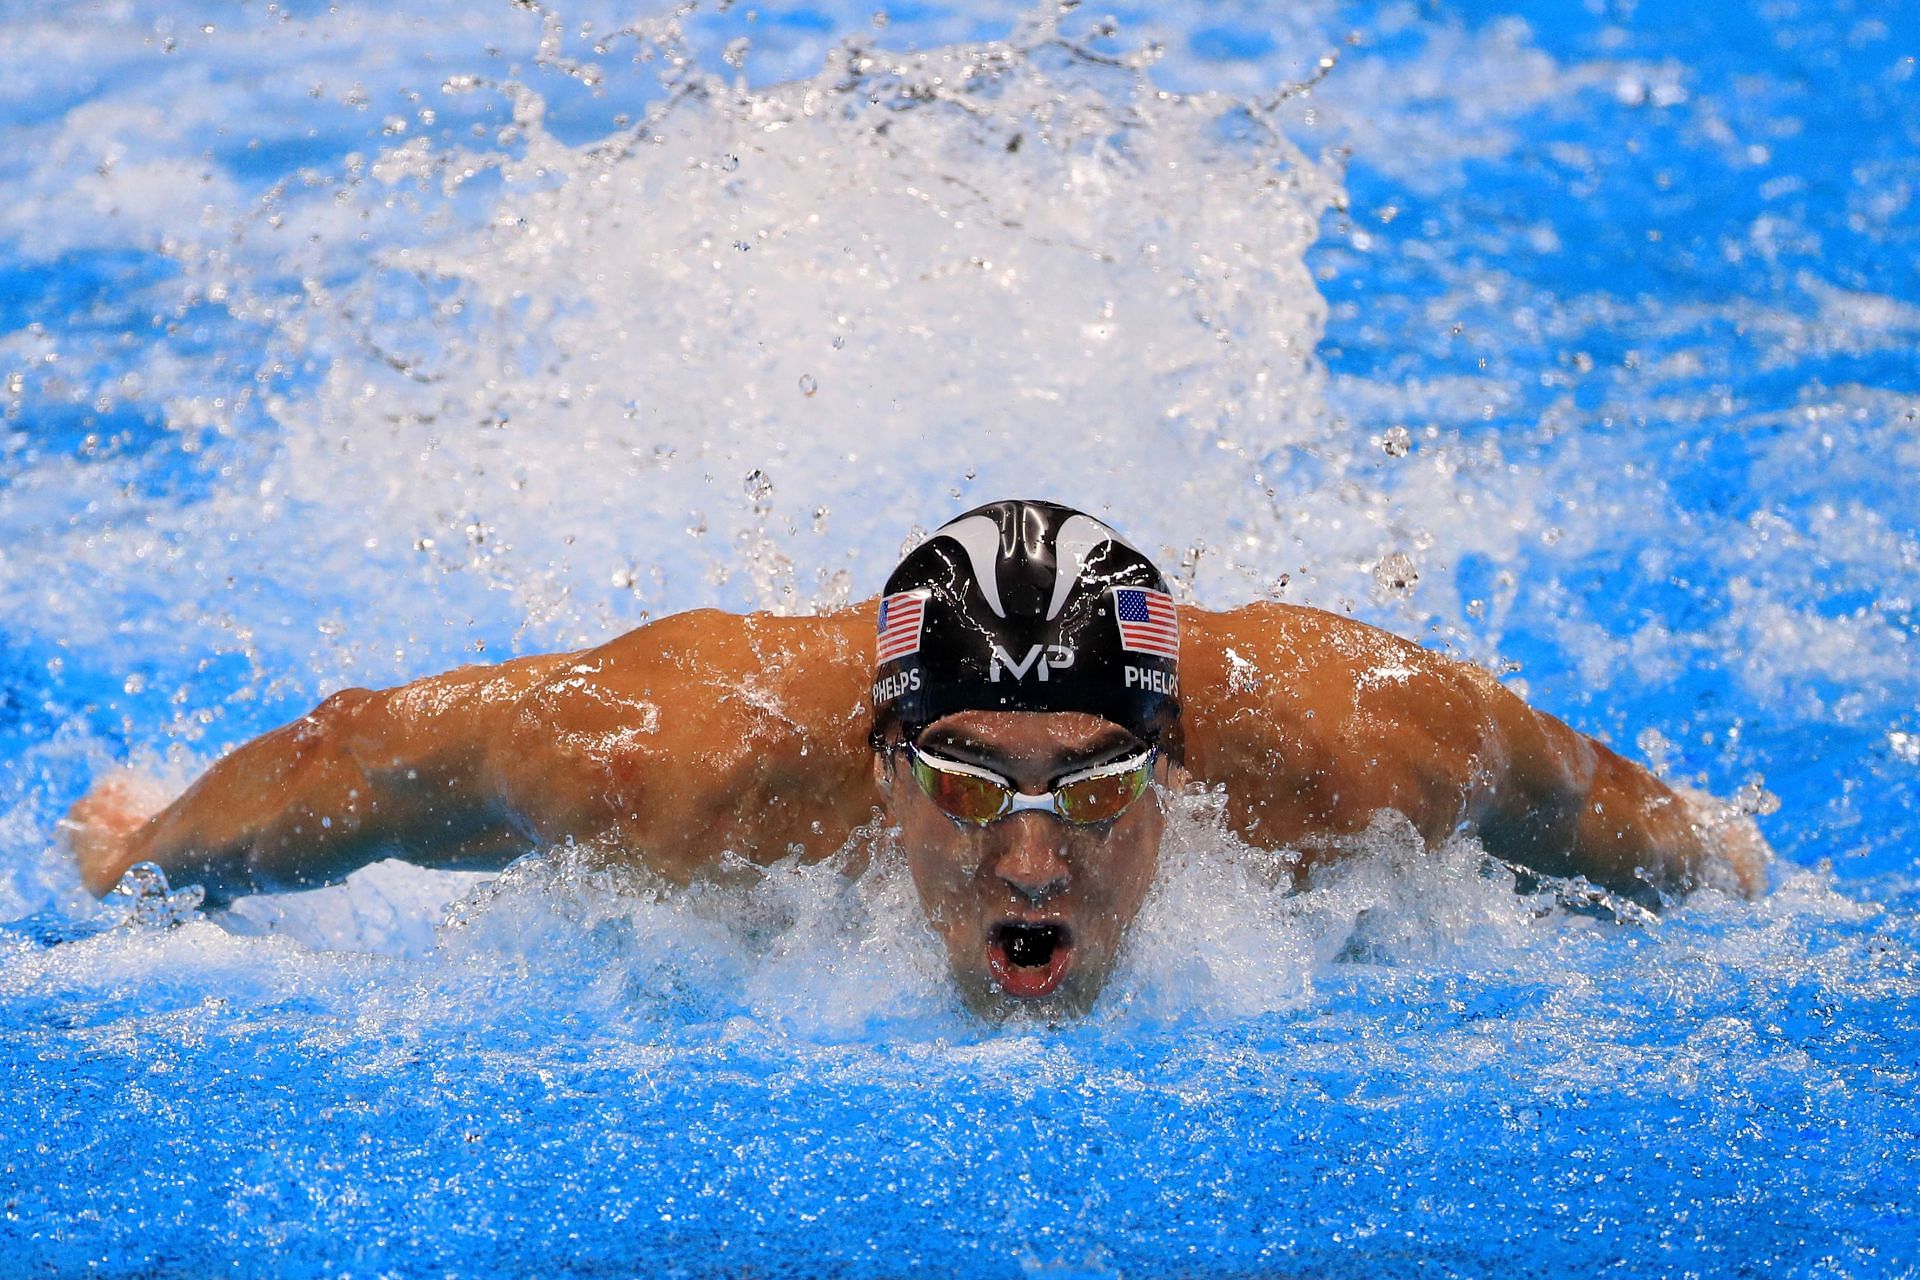 Phelps at the 2016 Rio Olympics